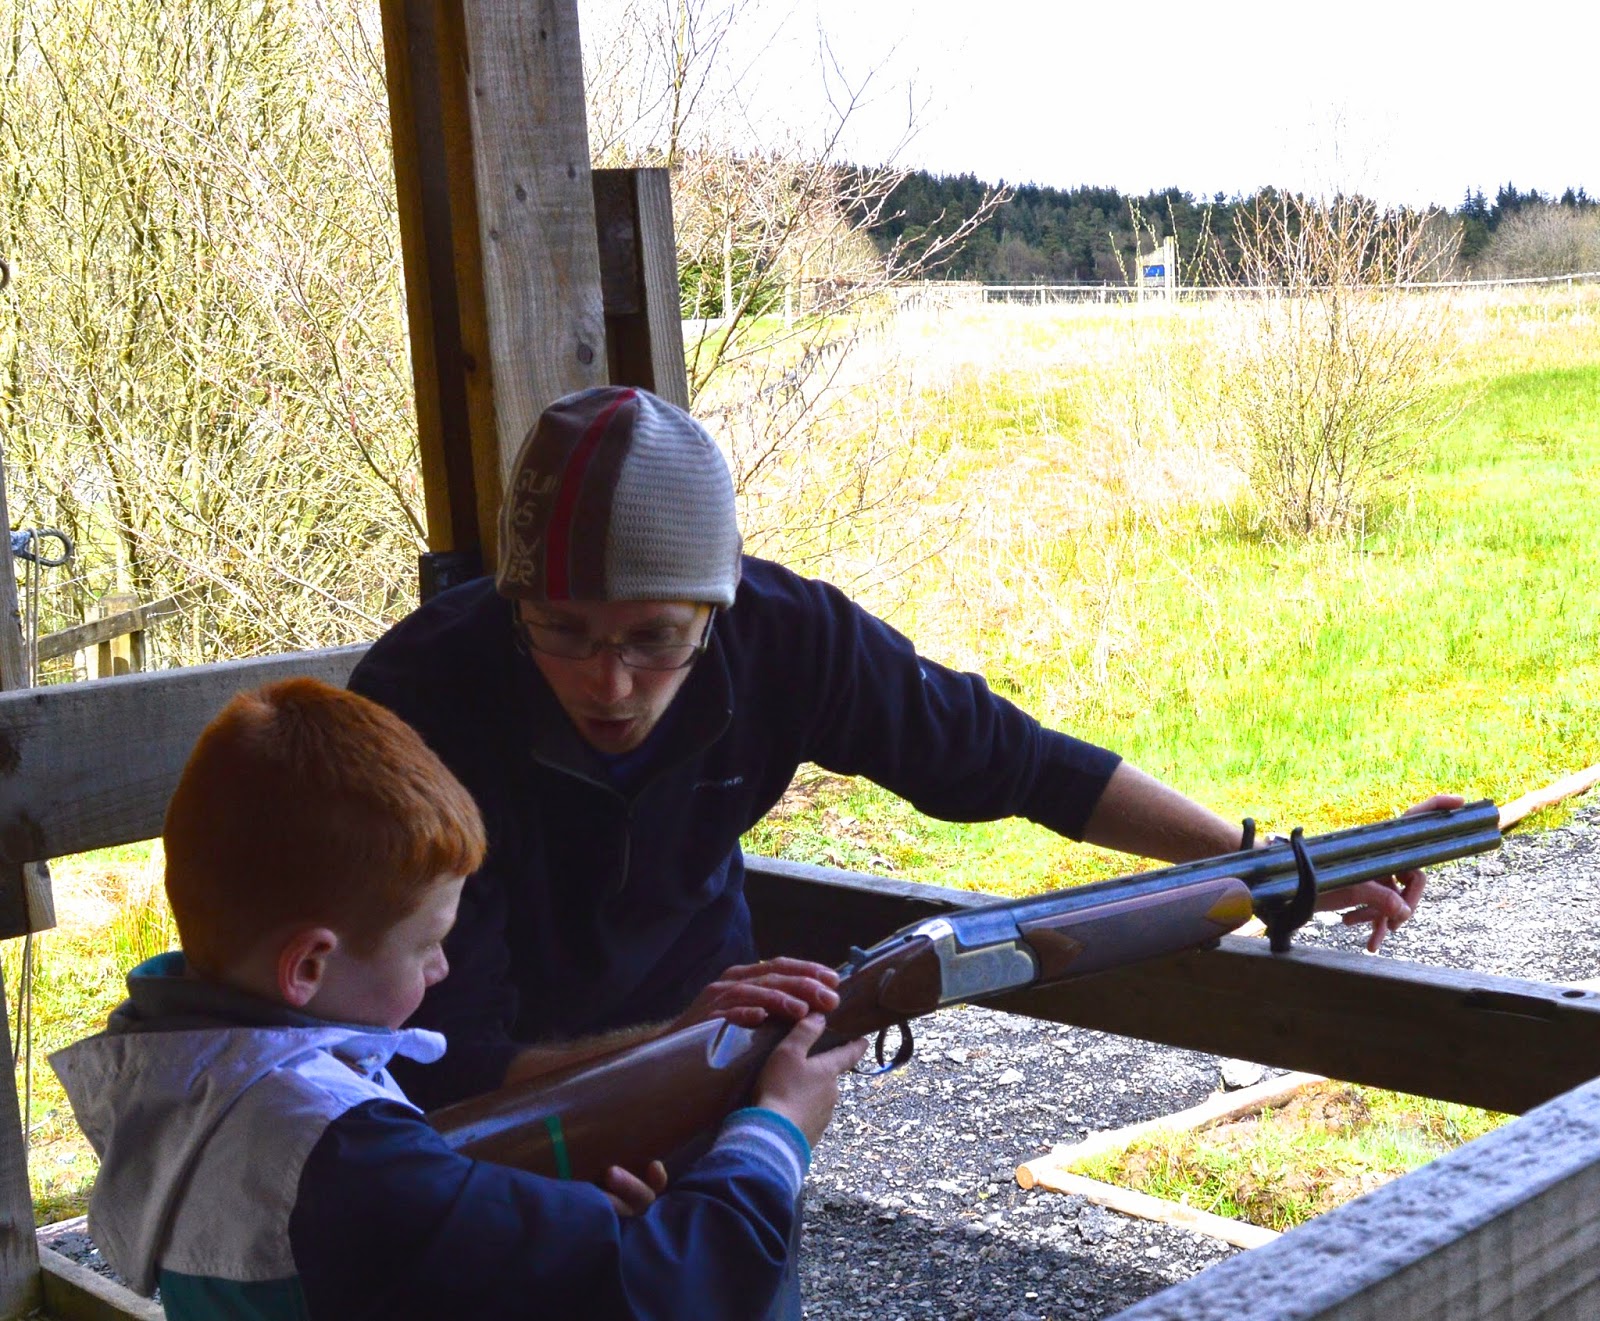 Laser Clay Shooting for children at The Calvert Trust, Kielder - A review